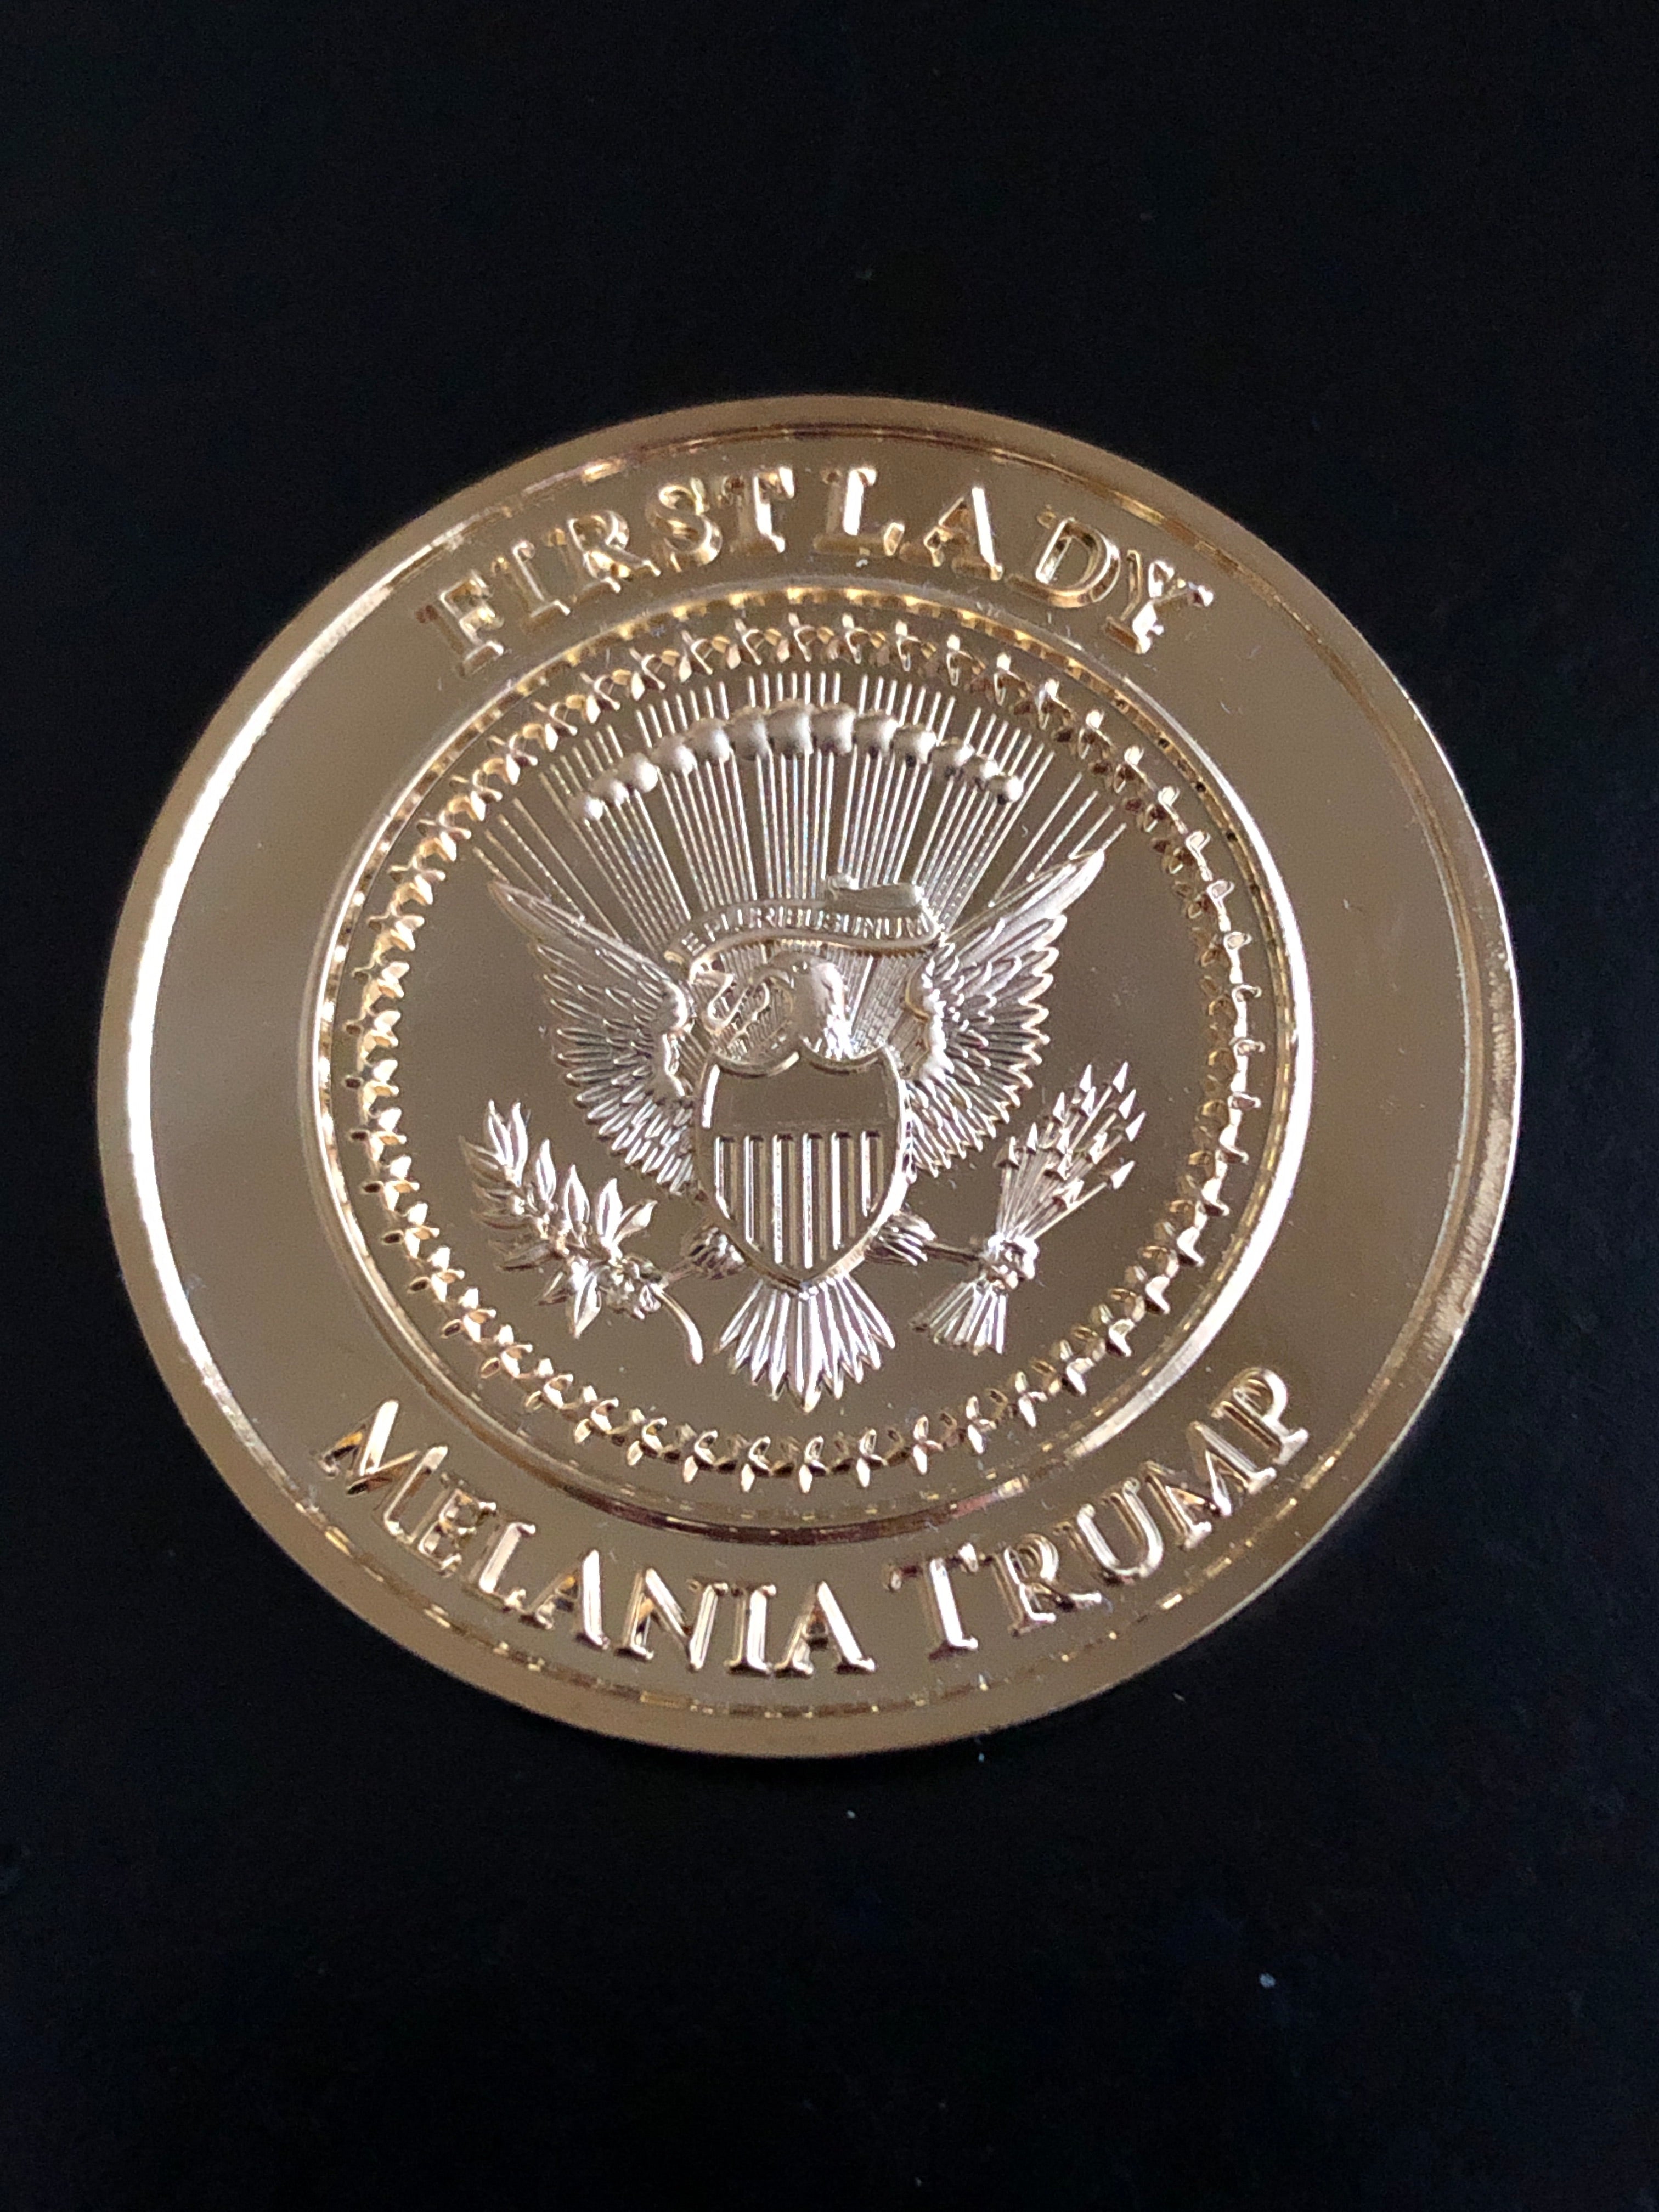 FLOTUS Melania Trump - Personal Coin